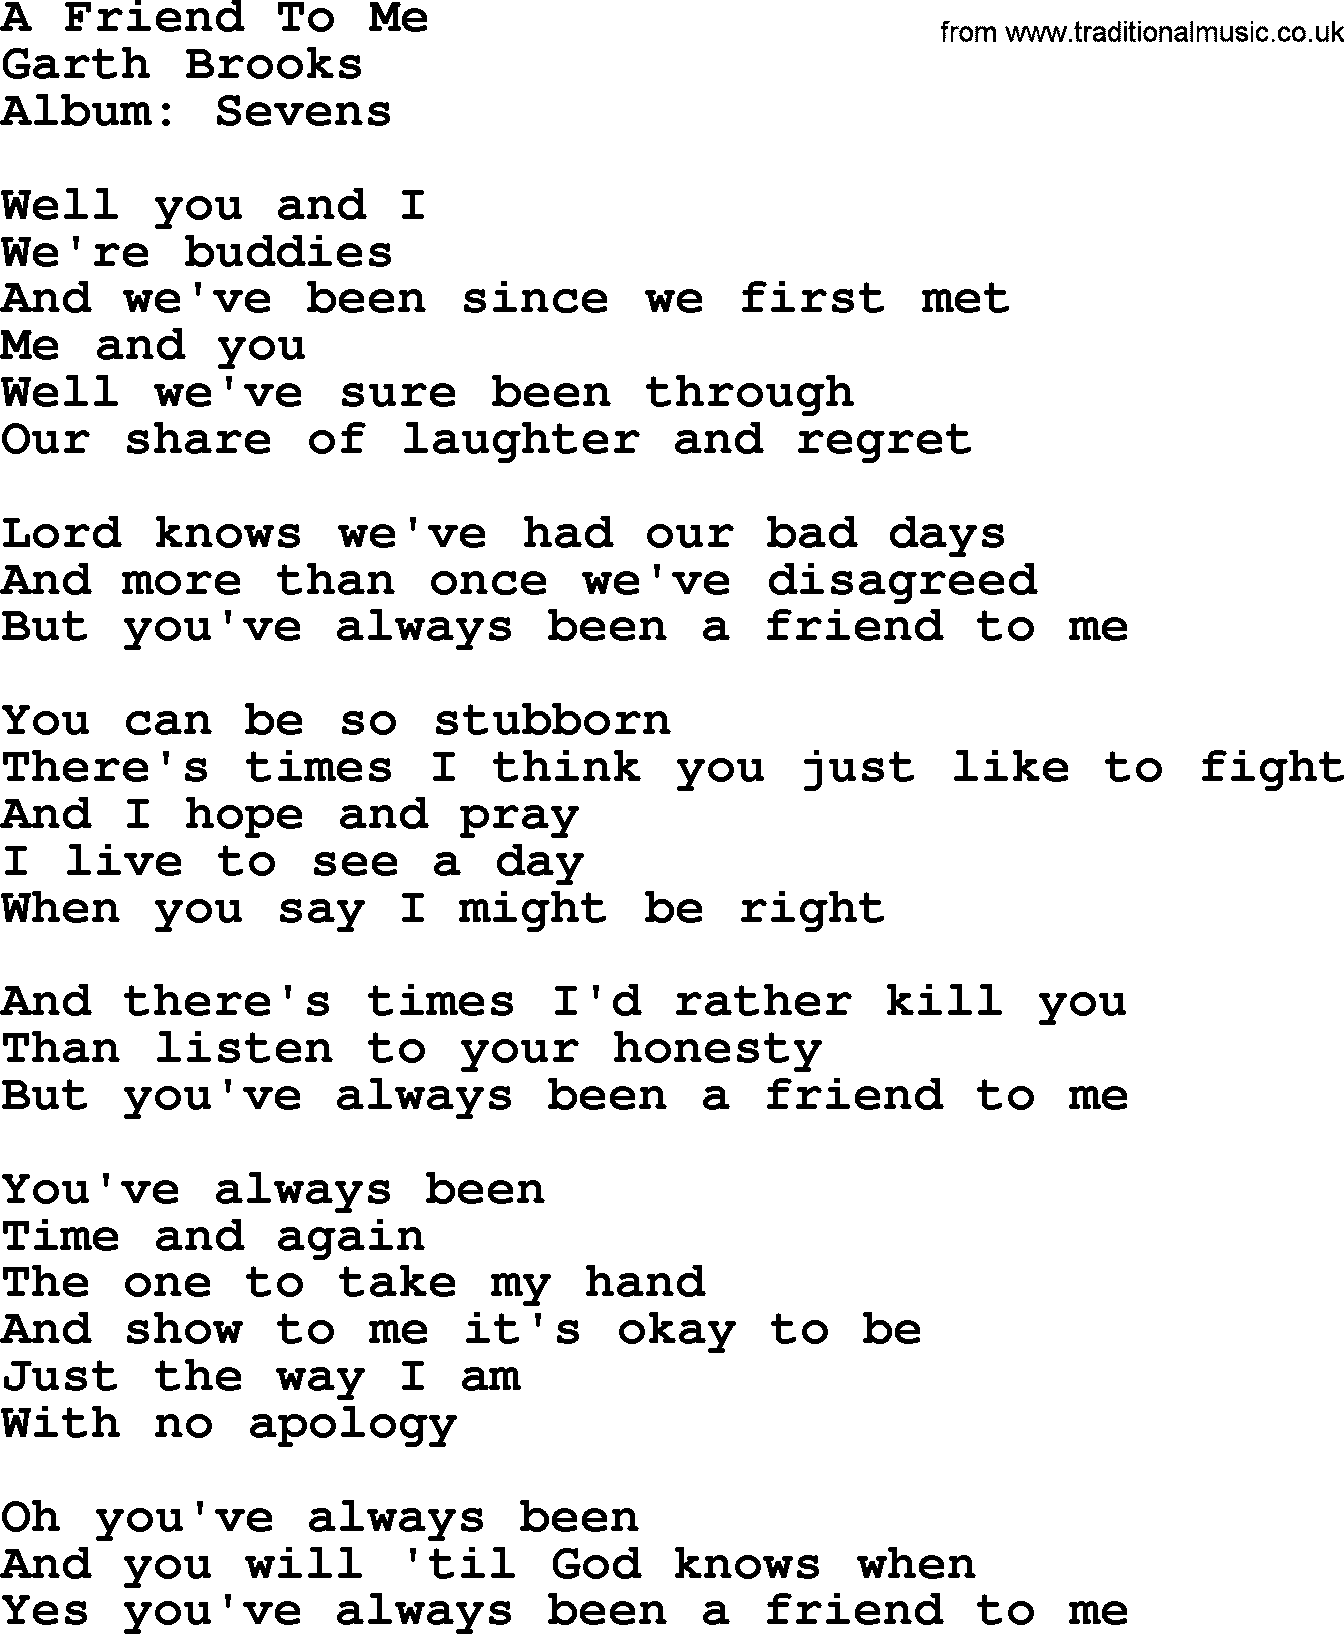 Garth Brooks song: A Friend To Me, lyrics